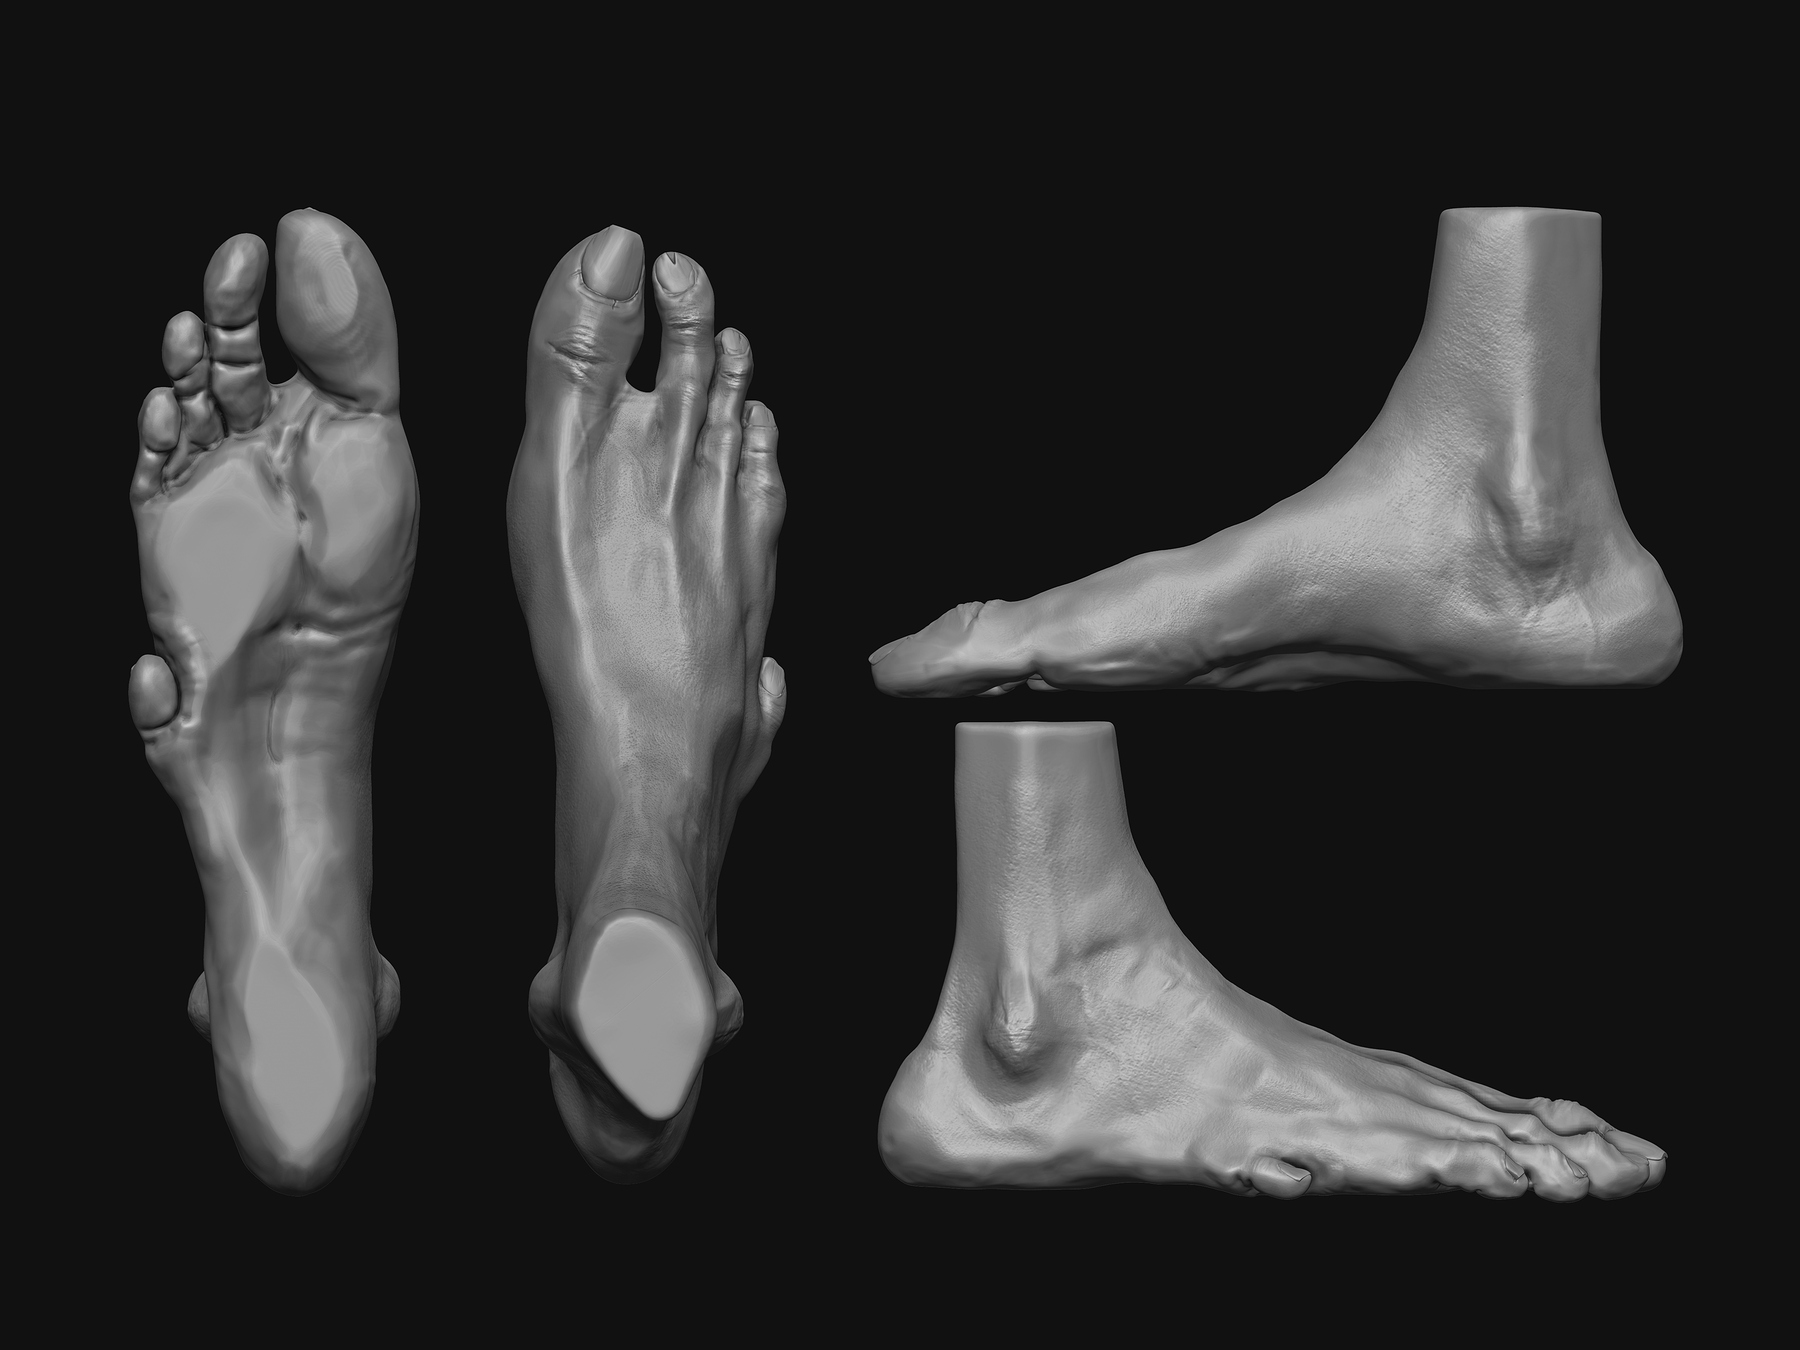 modeling feet zbrush